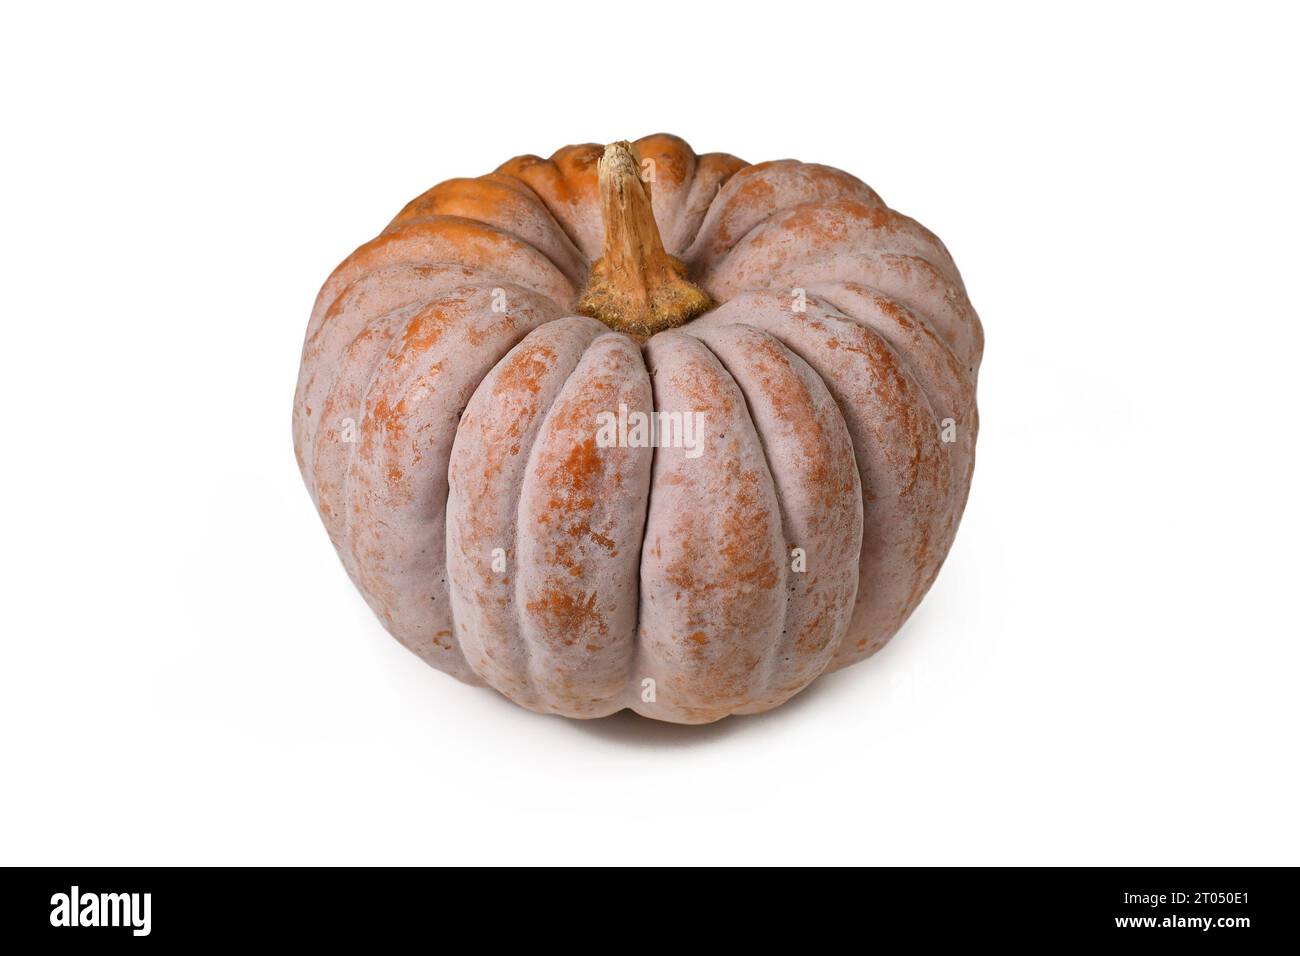 Mature ribbed 'Black Futsu' pumpkin squash with grey and orange skin on white background Stock Photo